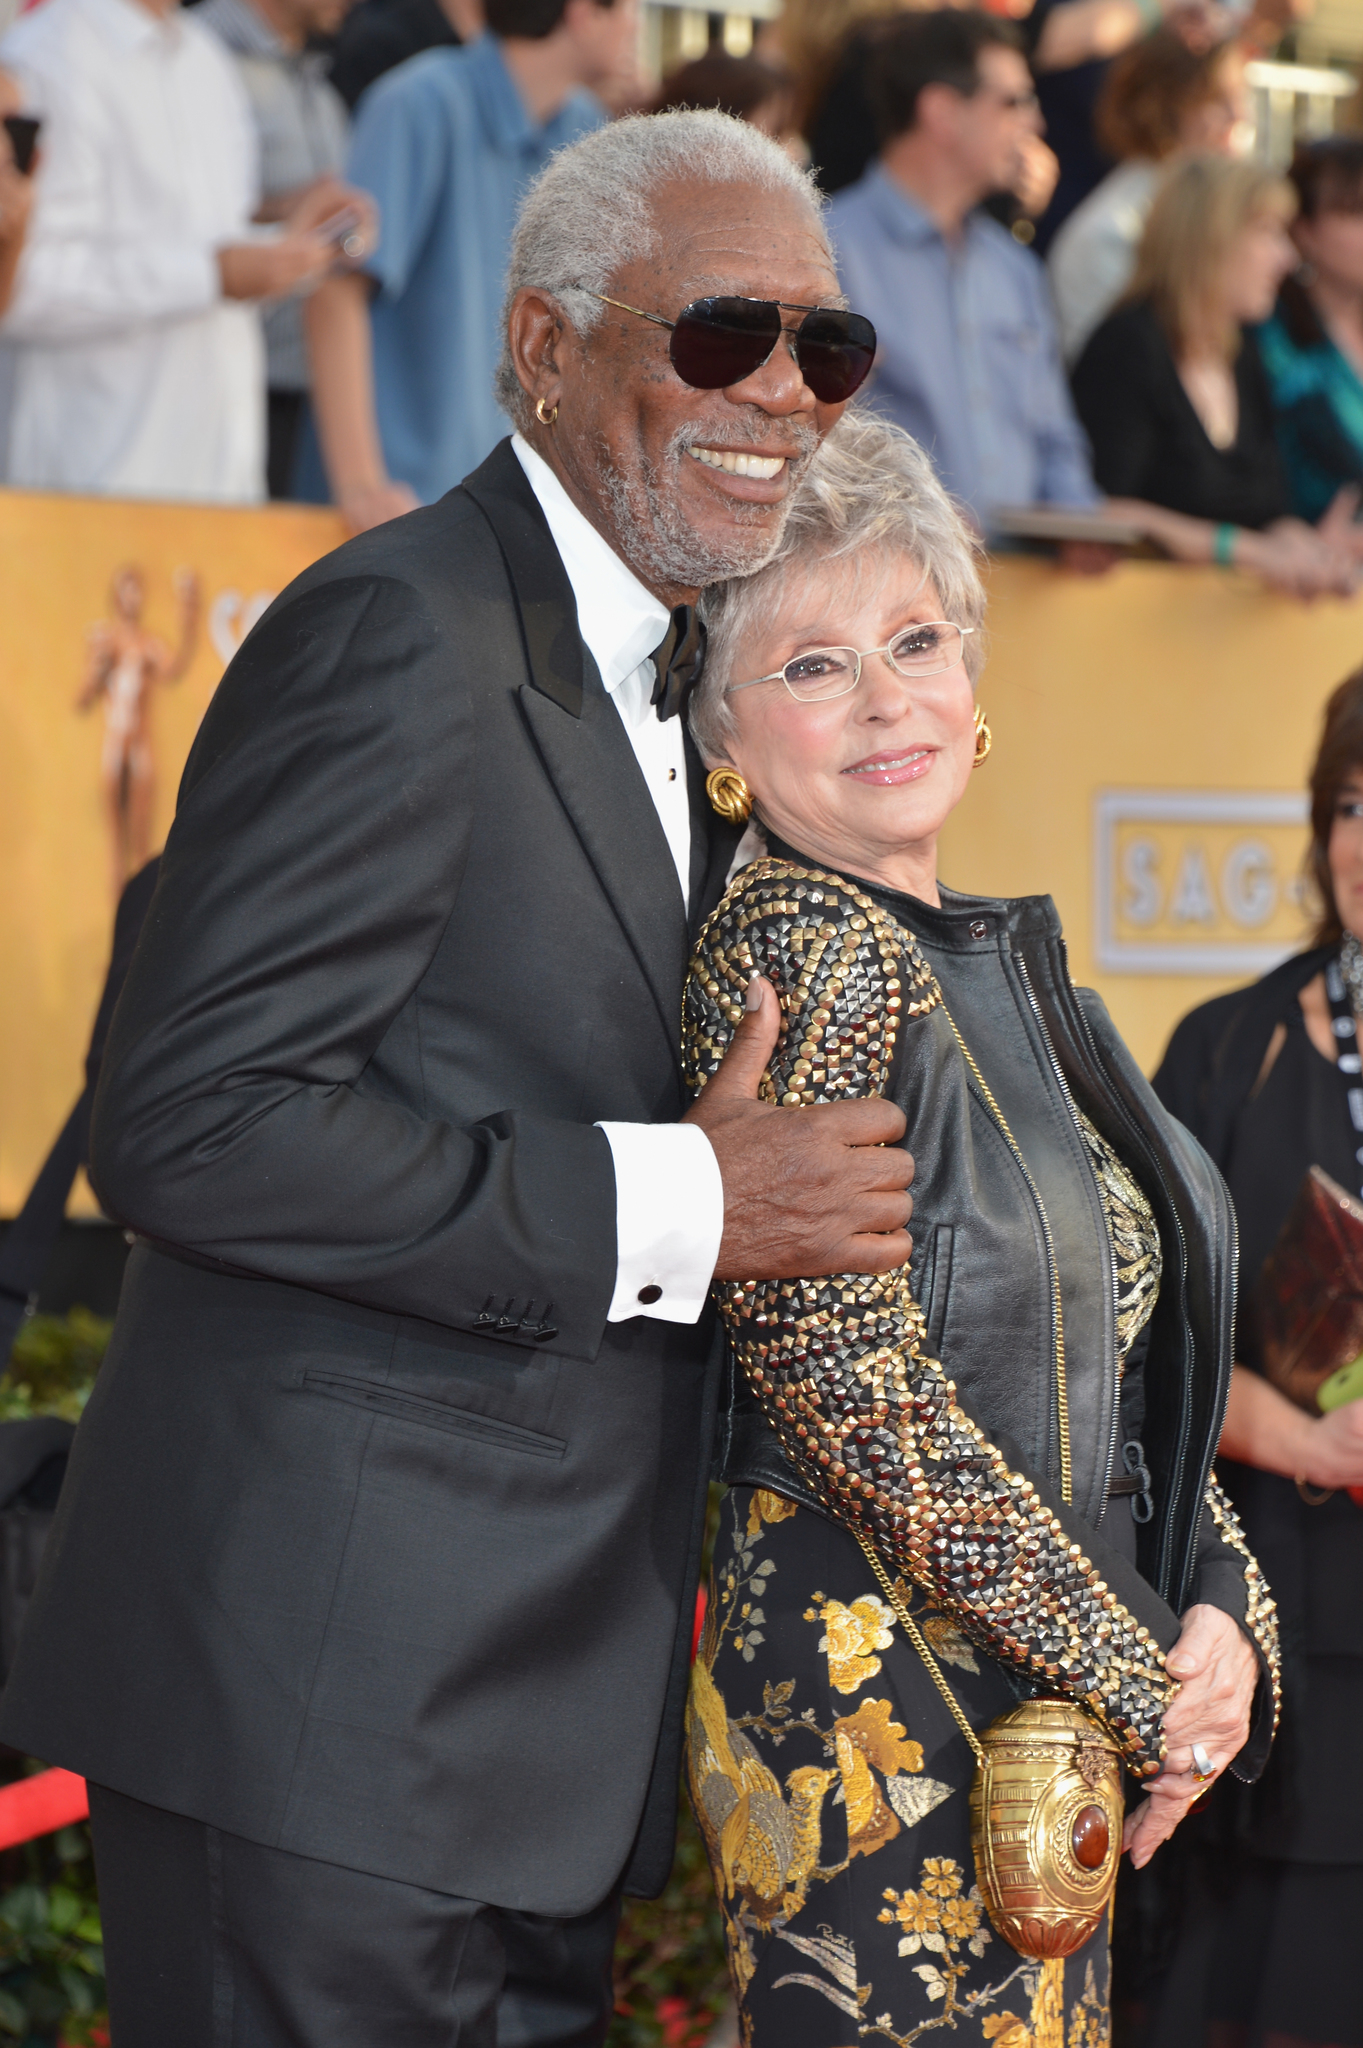 Morgan Freeman and Rita Moreno